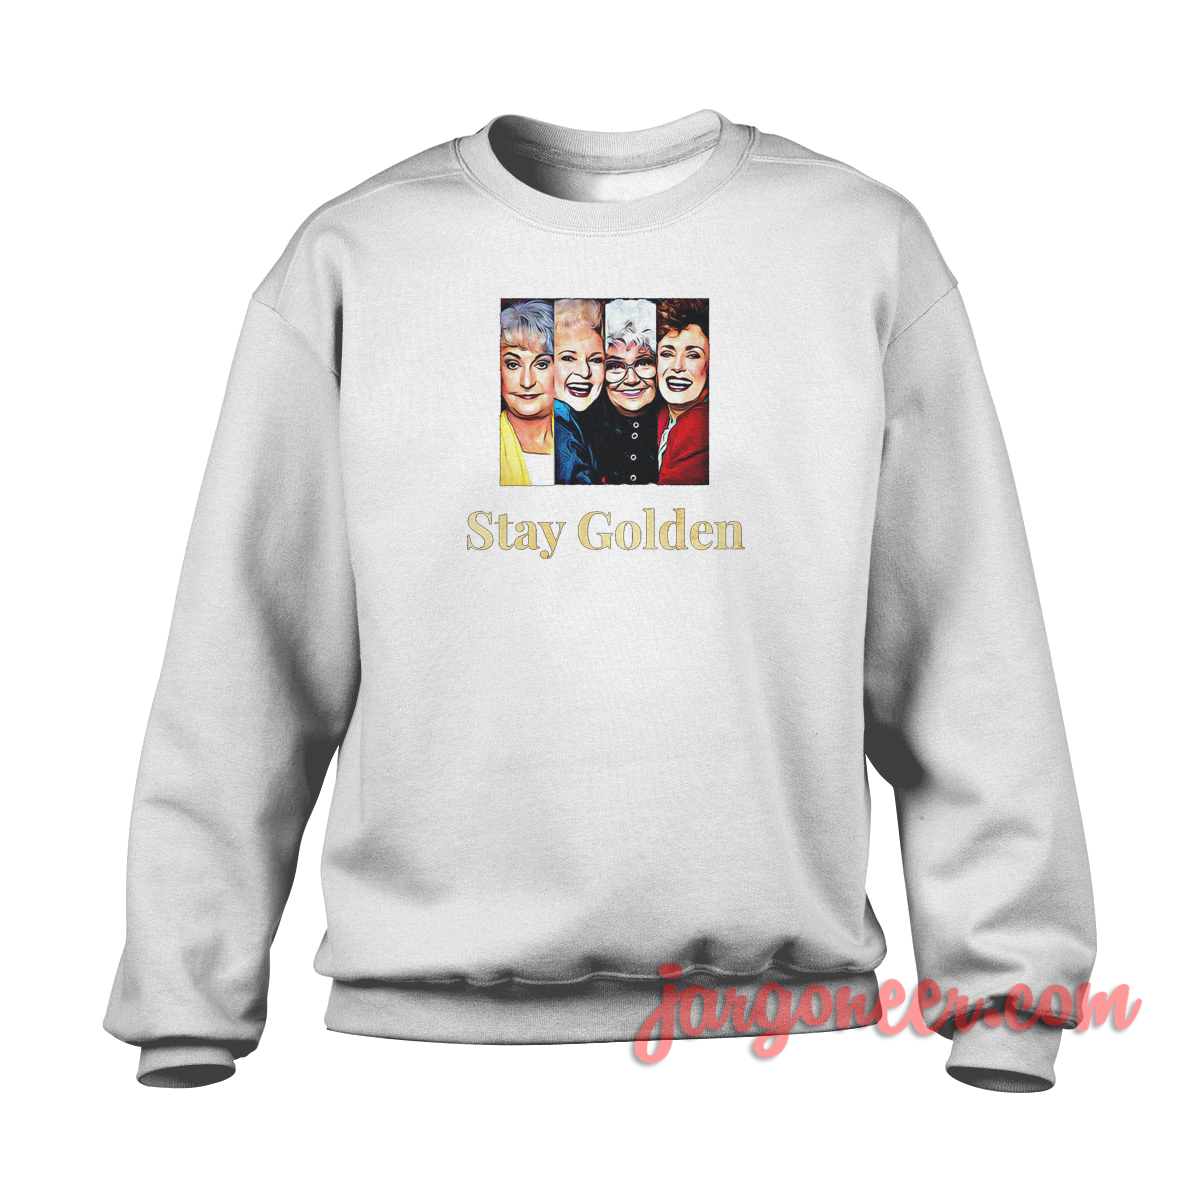 Stay Golden Movie 1 - Shop Unique Graphic Cool Shirt Designs